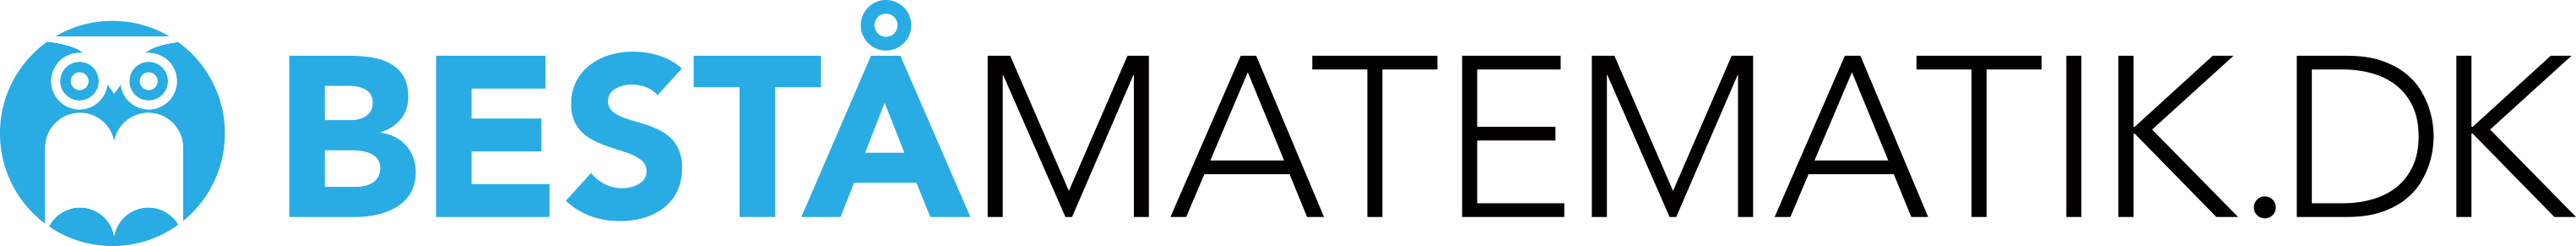 BeståMatematik logo